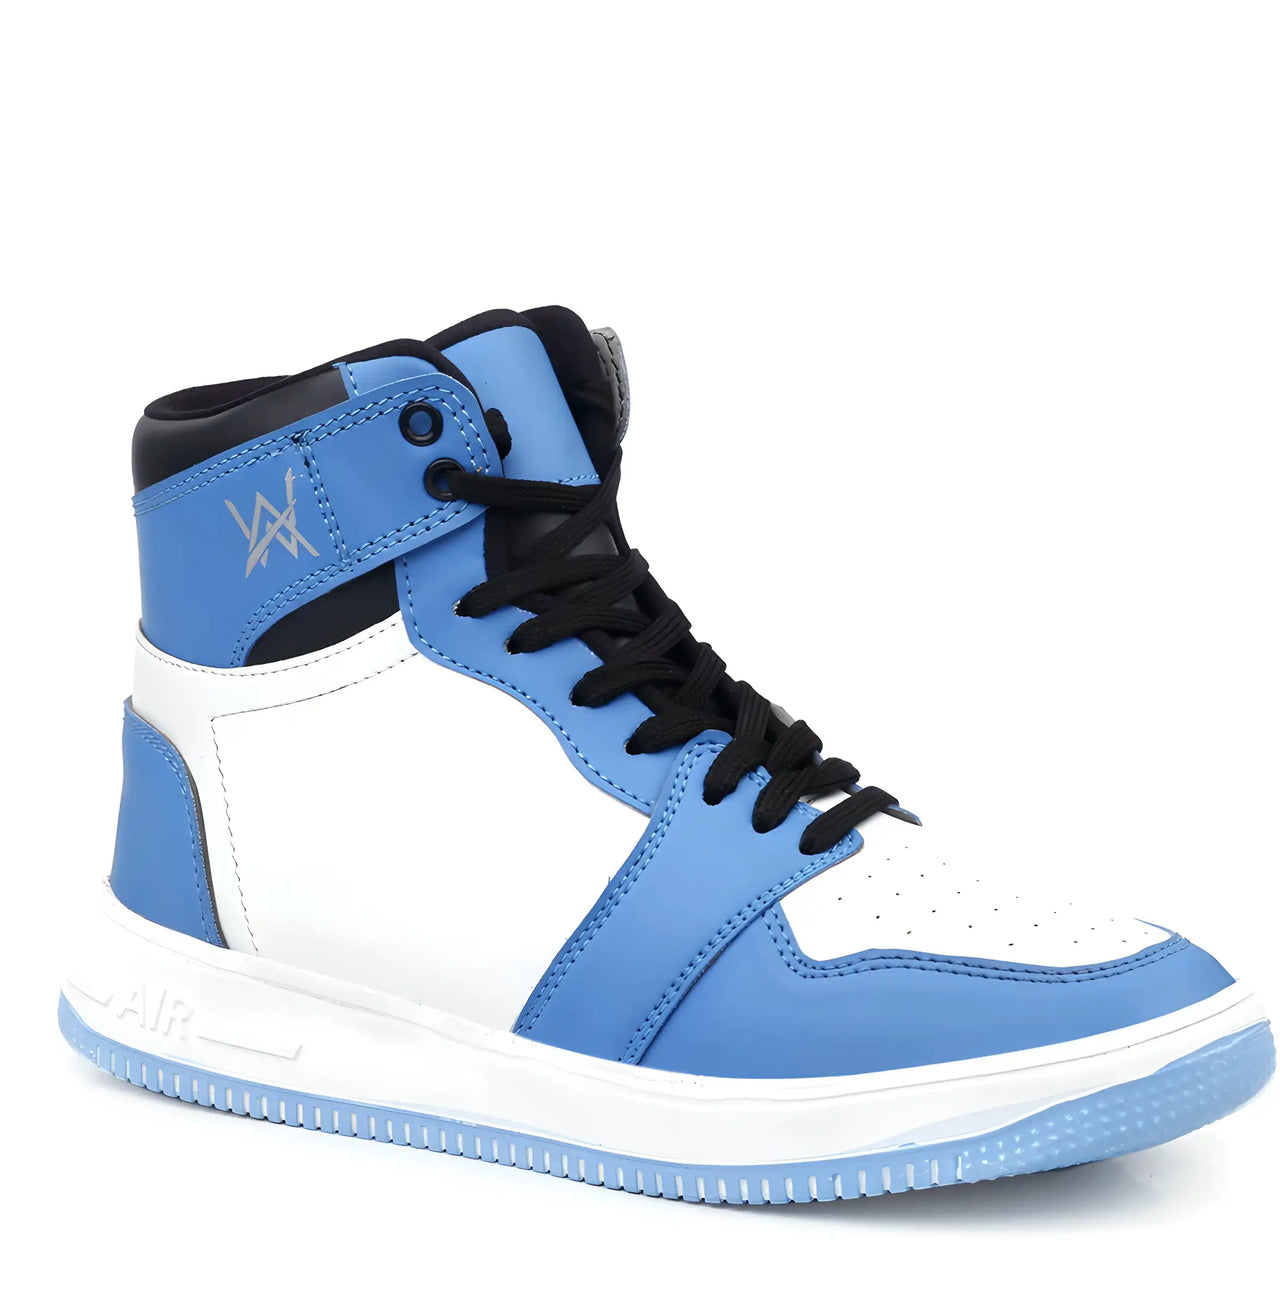 Woakers Blue Men's Casual Sneakers